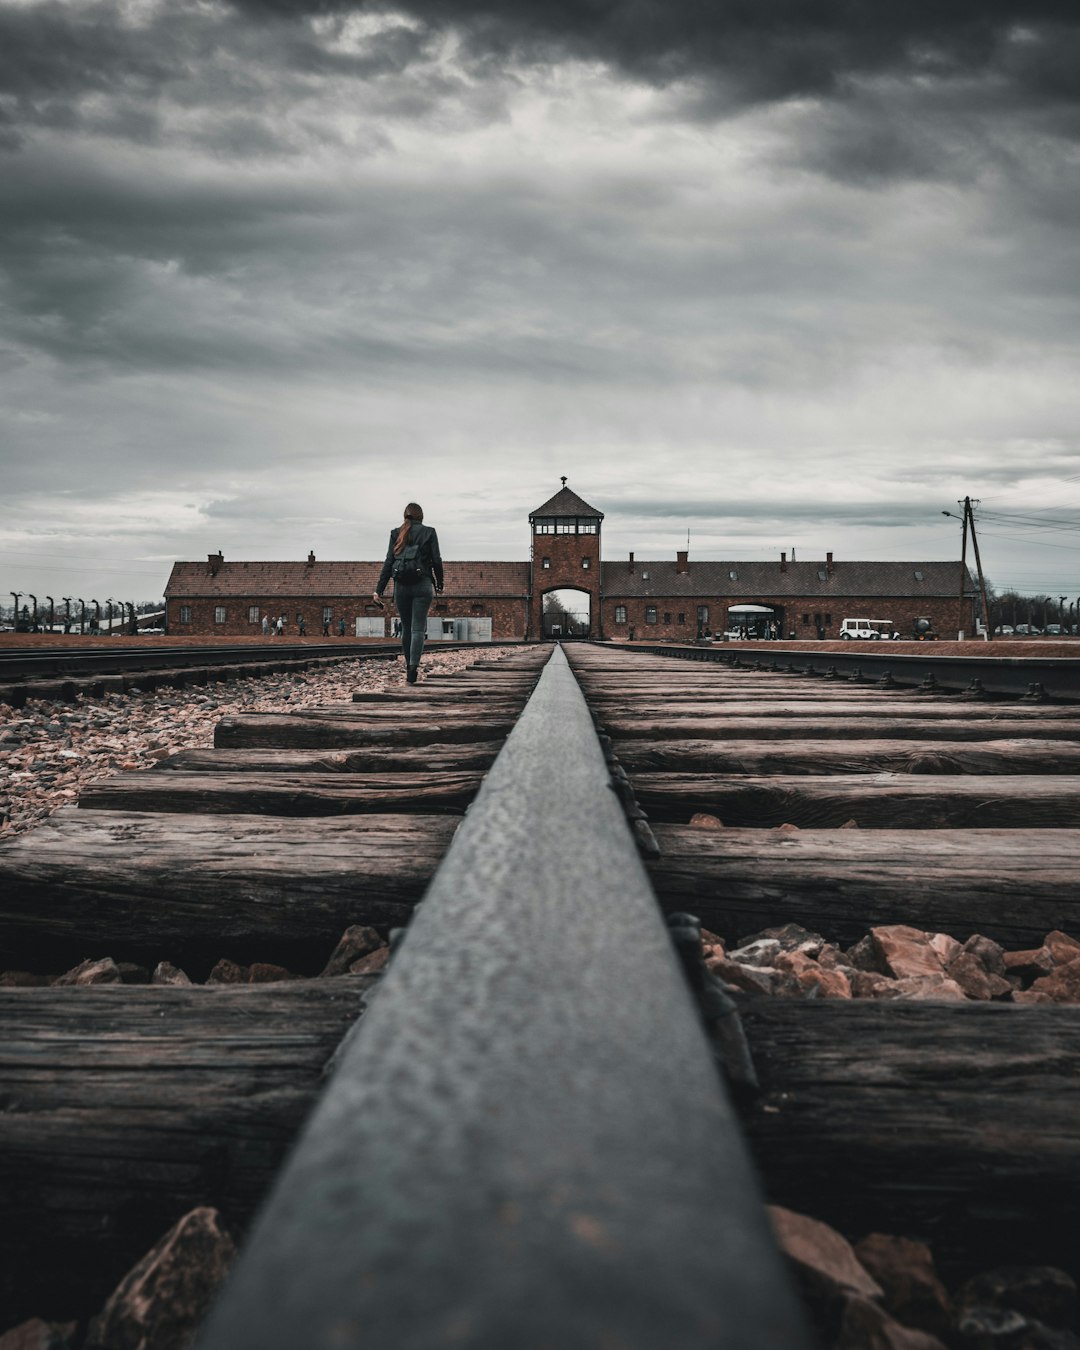 Travel Tips and Stories of Auschwitz II-Birkenau in Poland